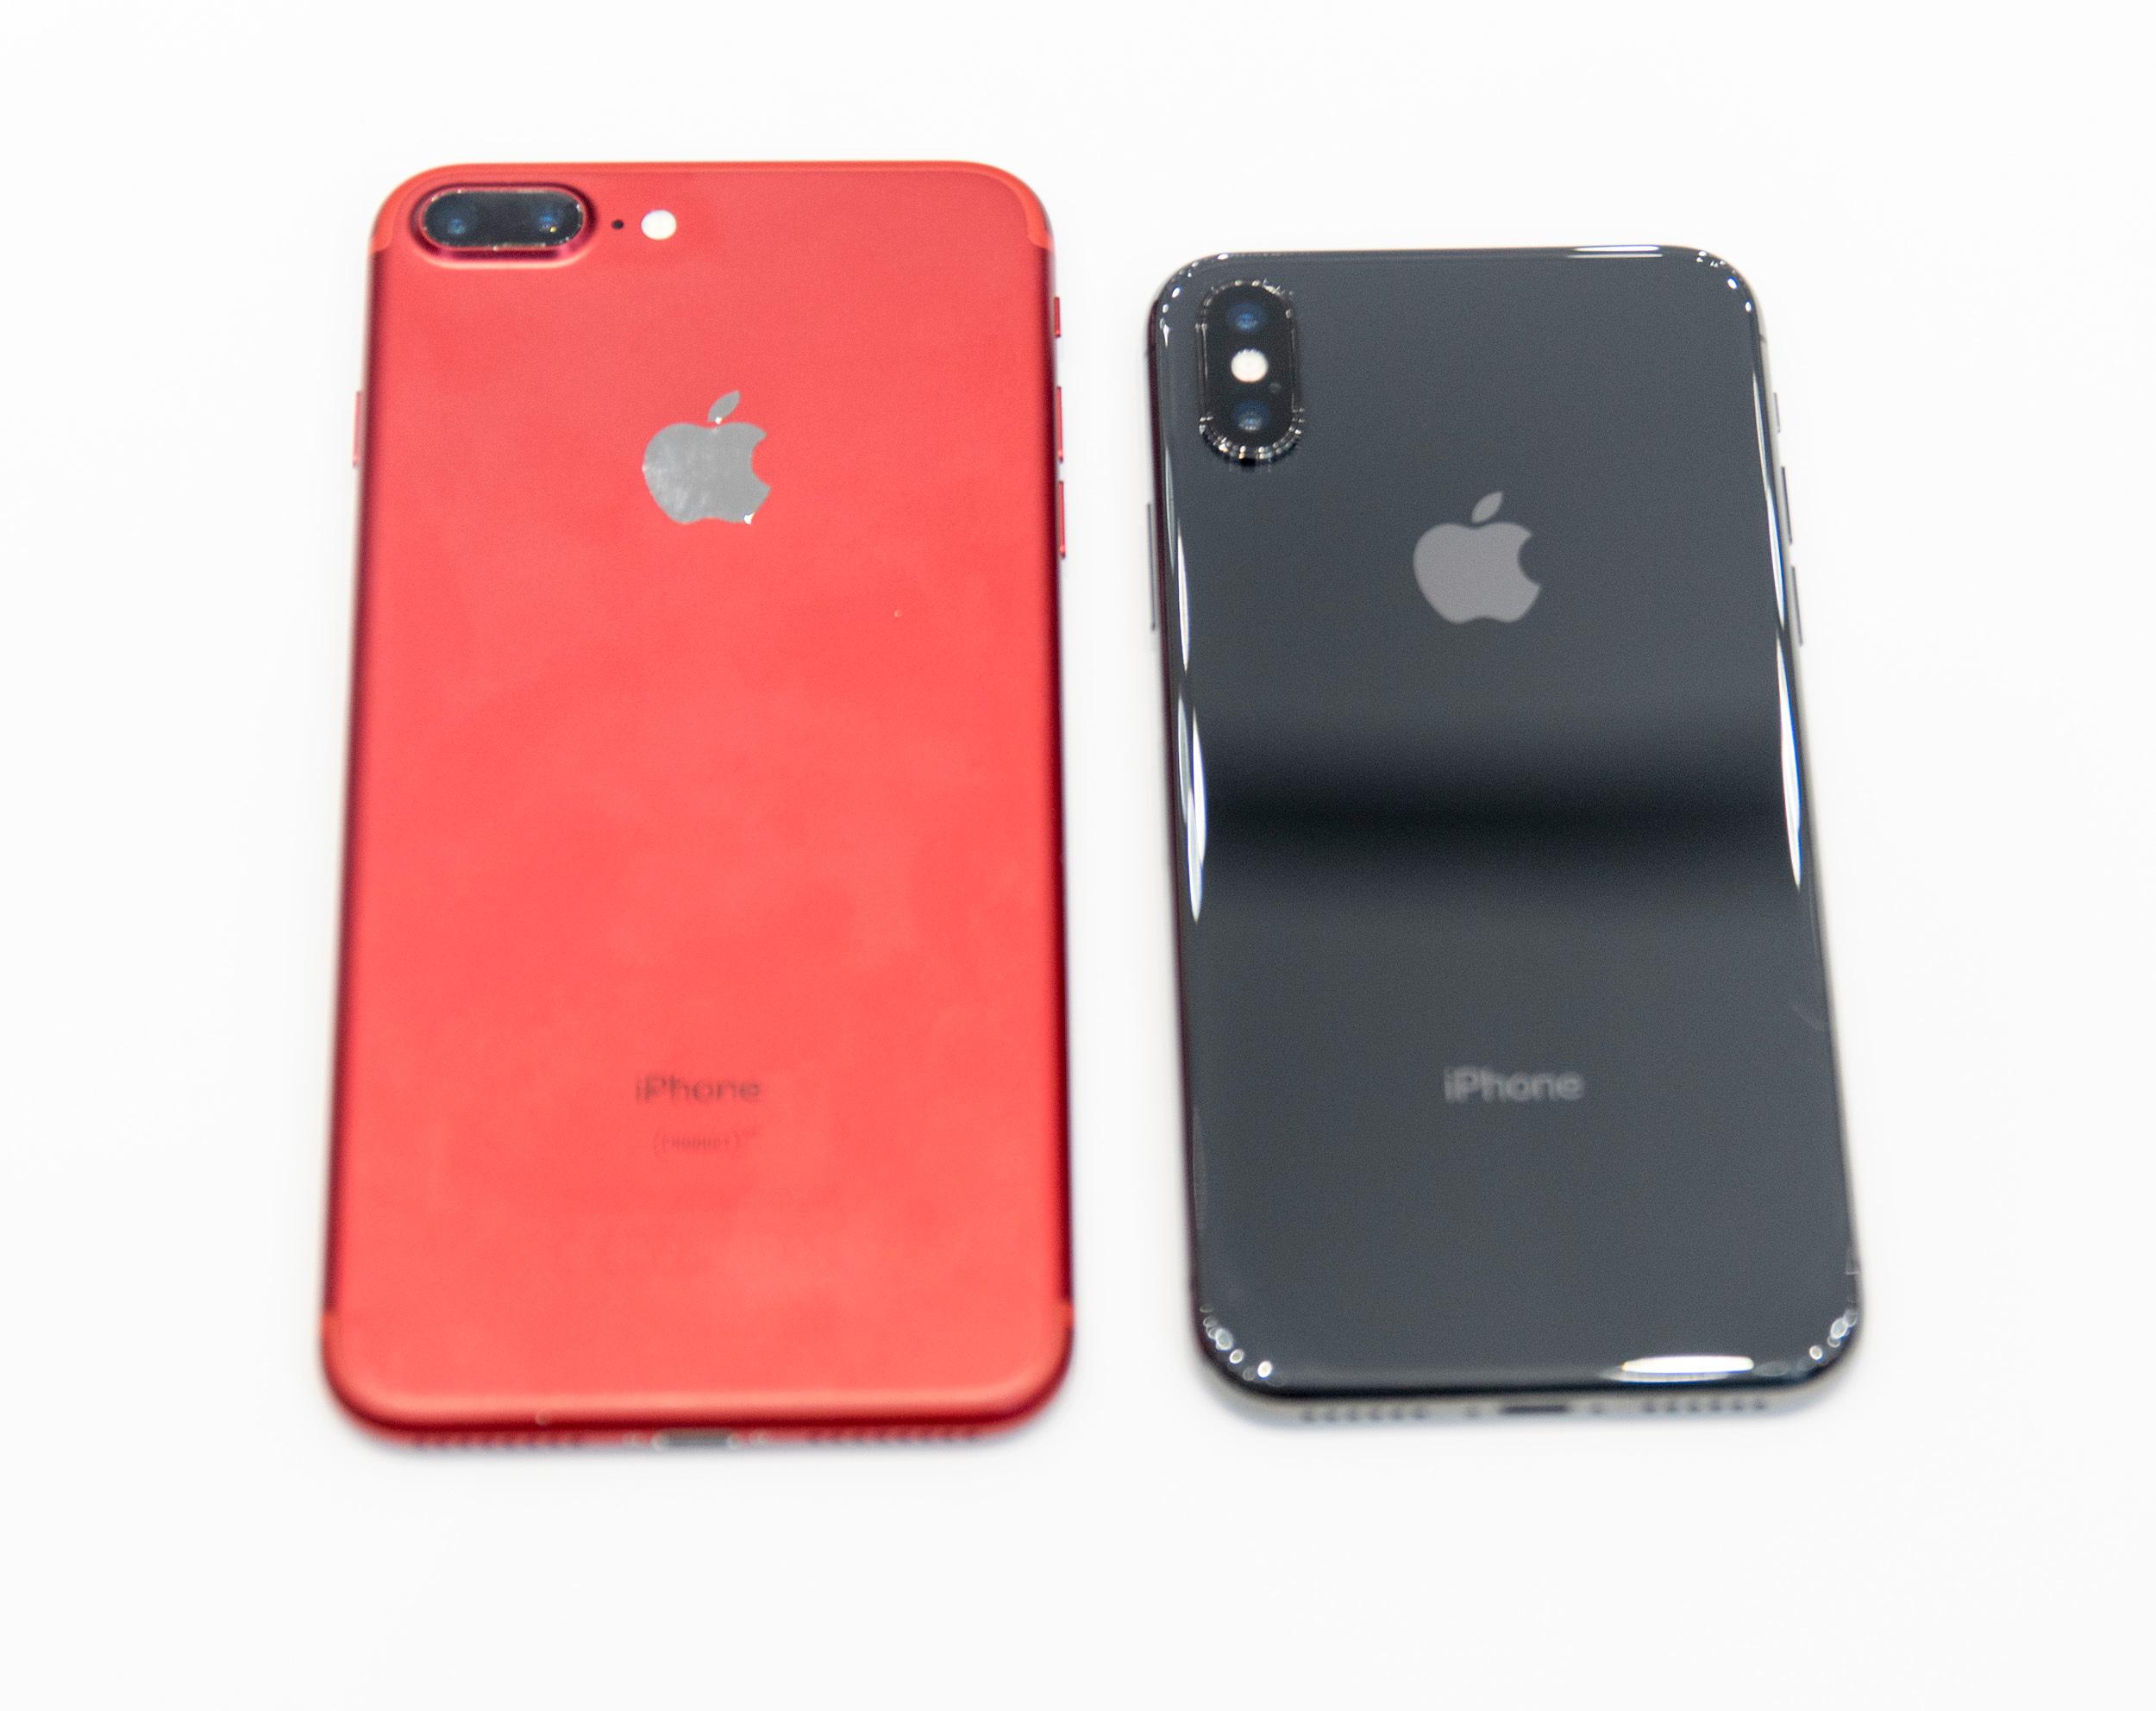 iPhone 7 Plus til venstre, iPhone X til høyre.